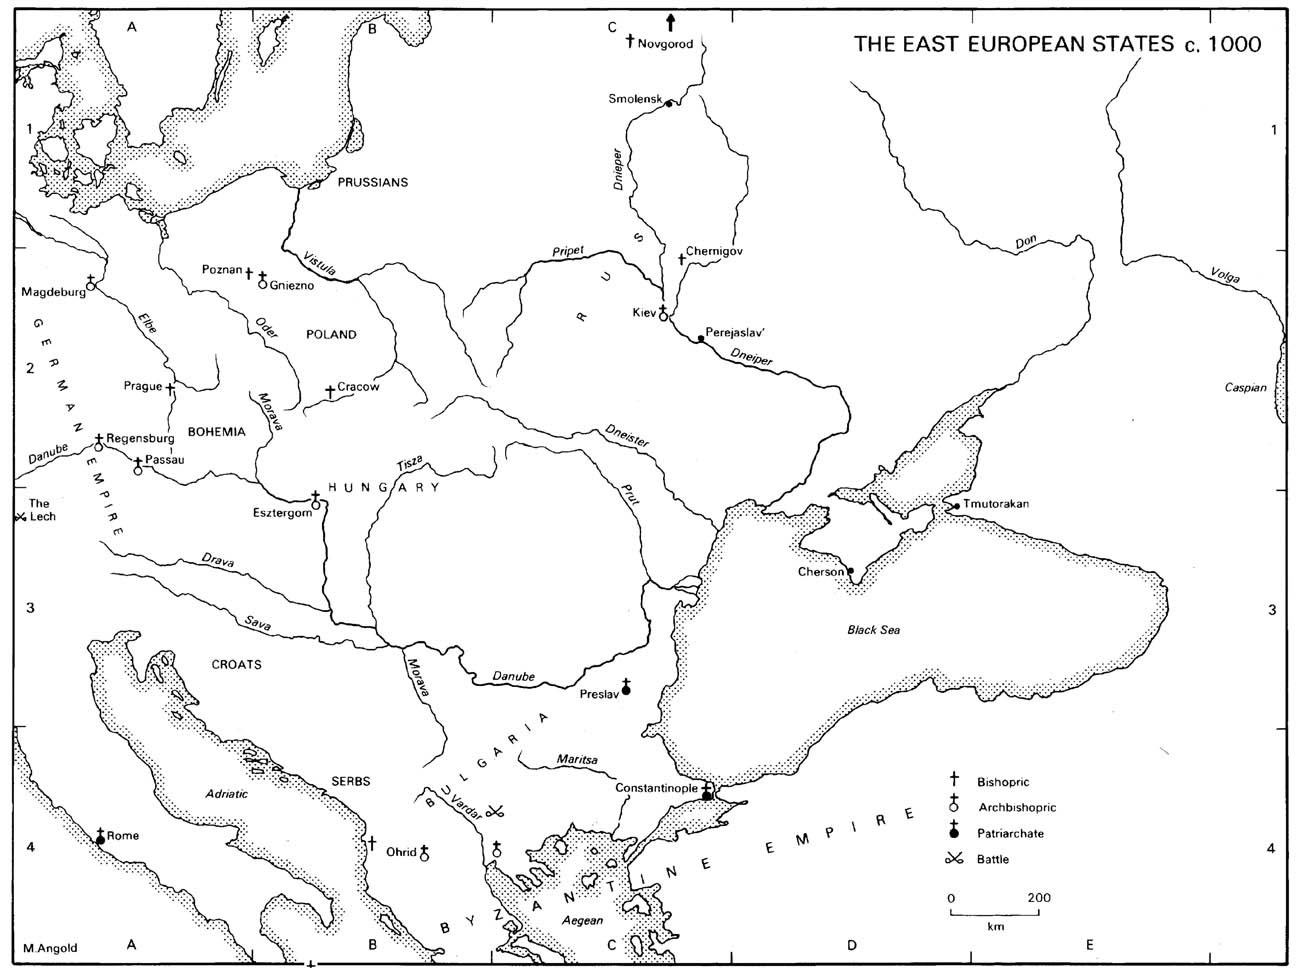 8. The East European States, c.1000